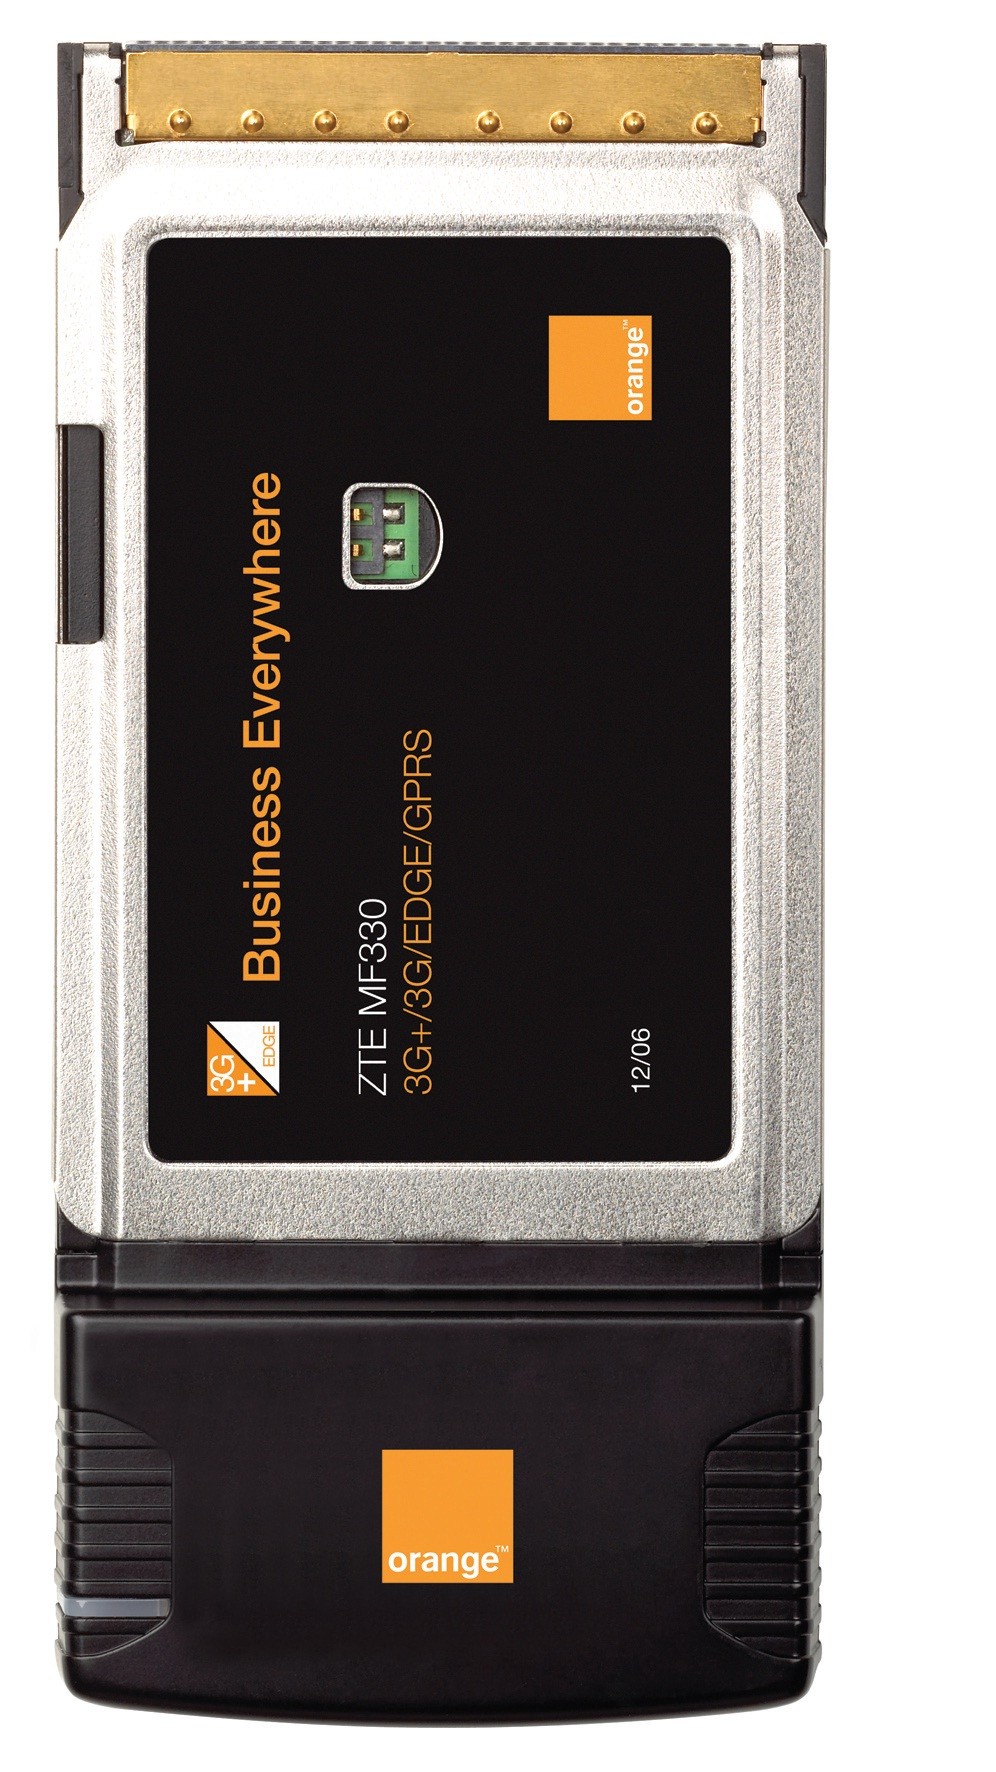 Orange ZTE MF330 HSDPA PCMCIA Type II Card Modem